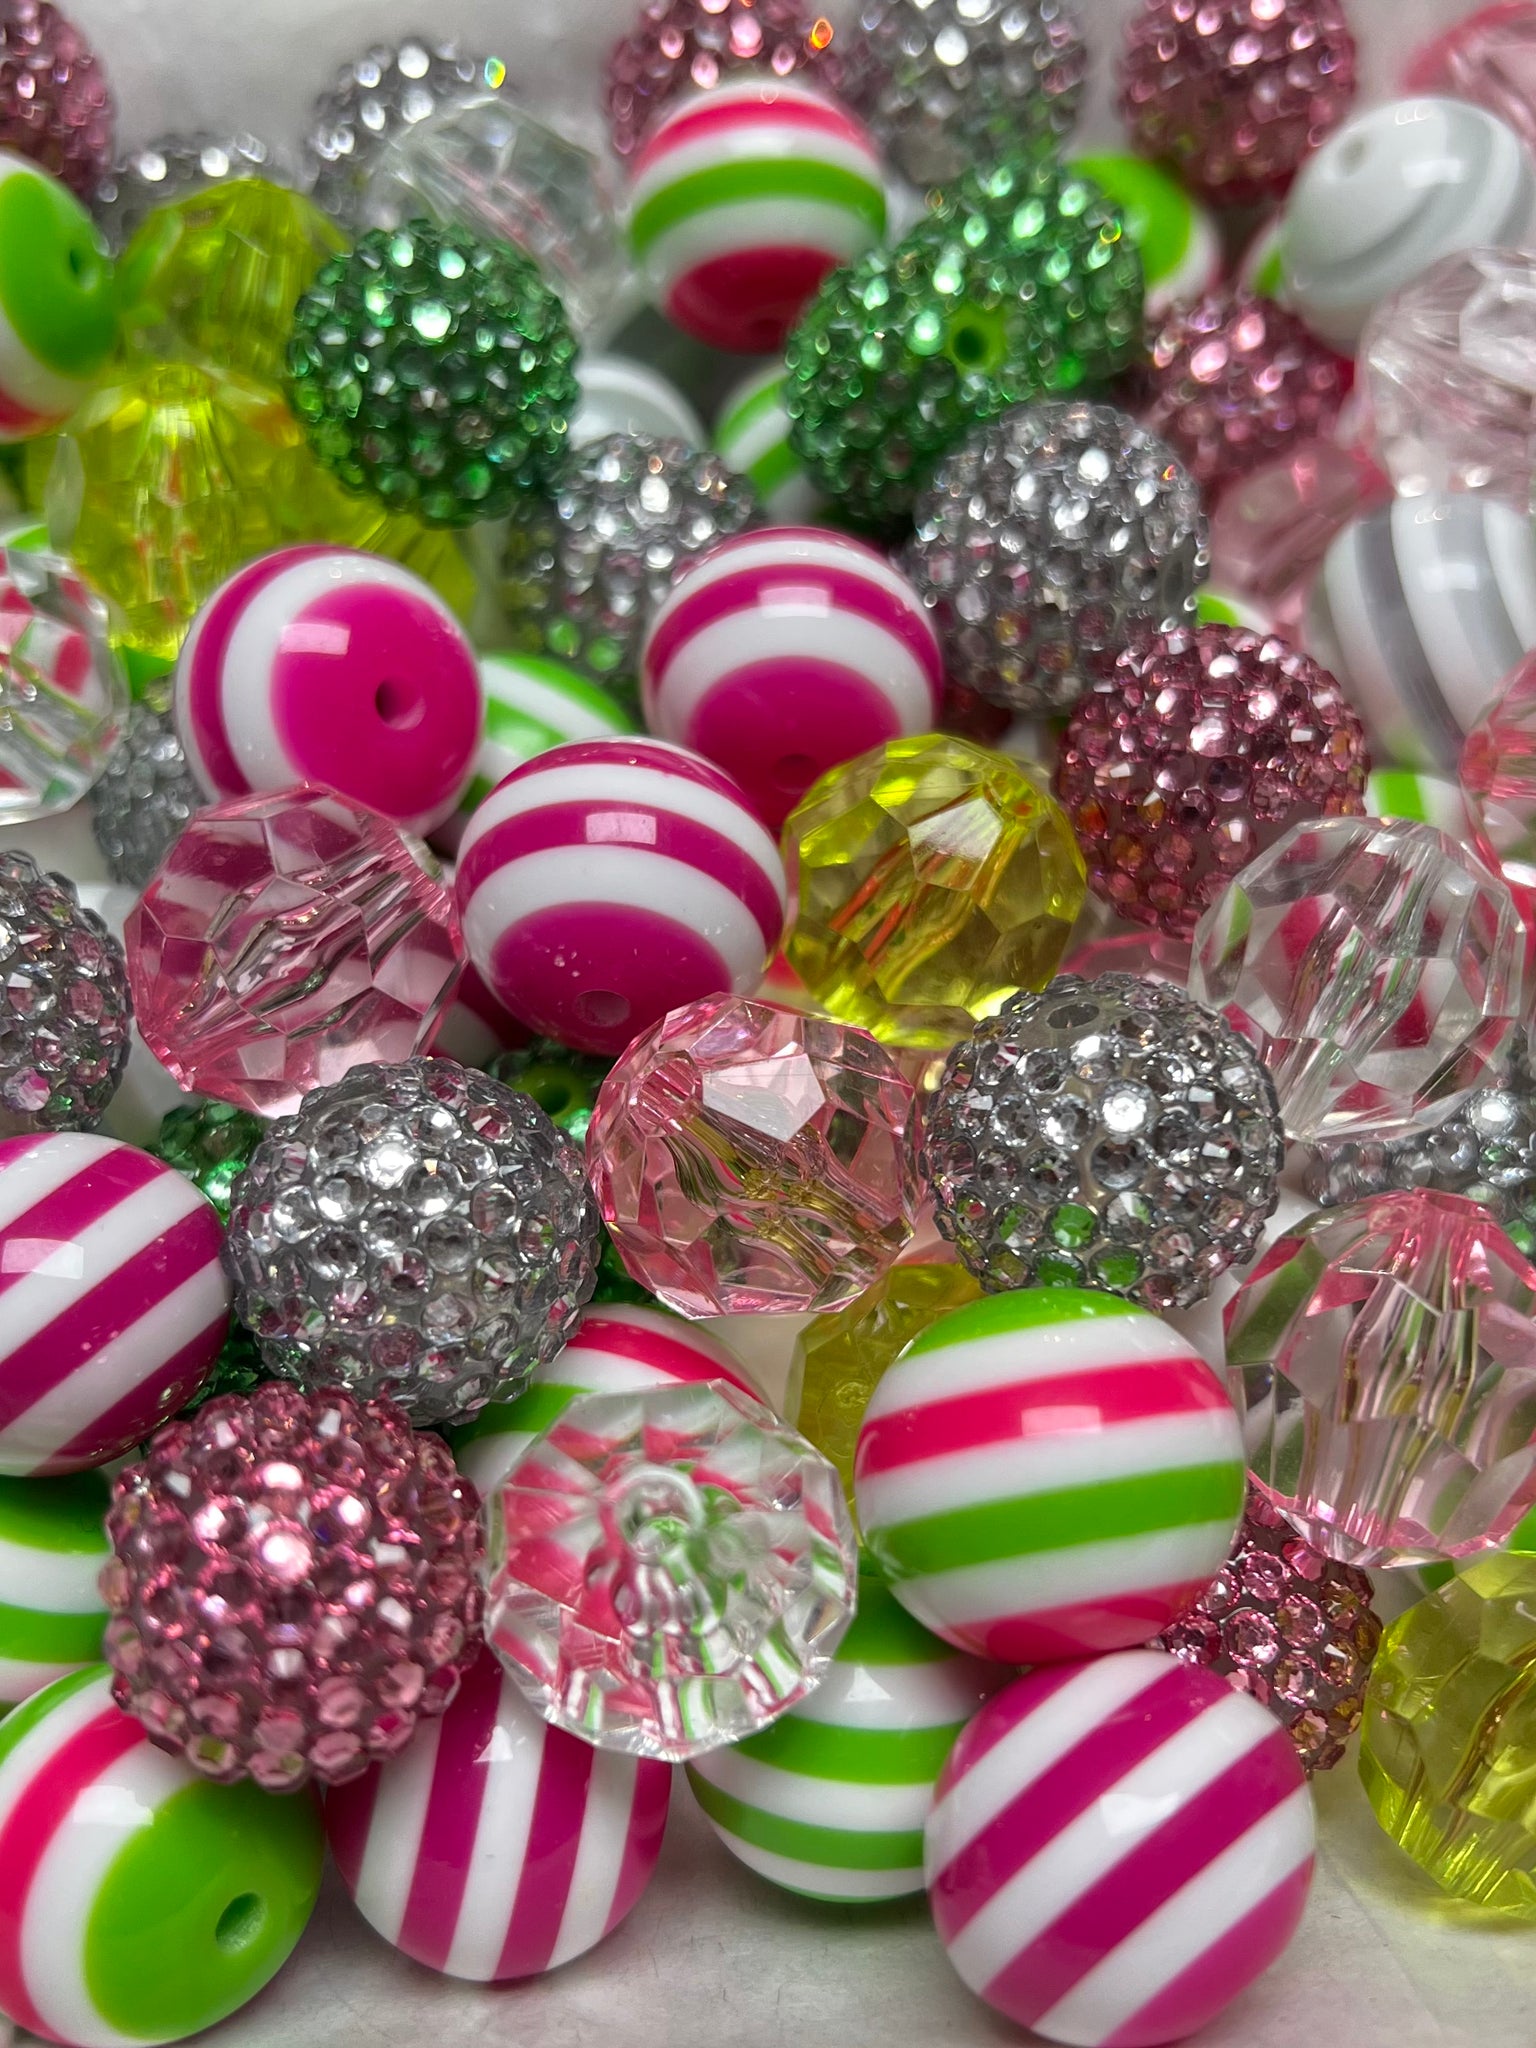 Chunky Beads, 20mm Round Rhinestone Acrylic Bubblegum Beads, 20mm Rhinestone  Beads 